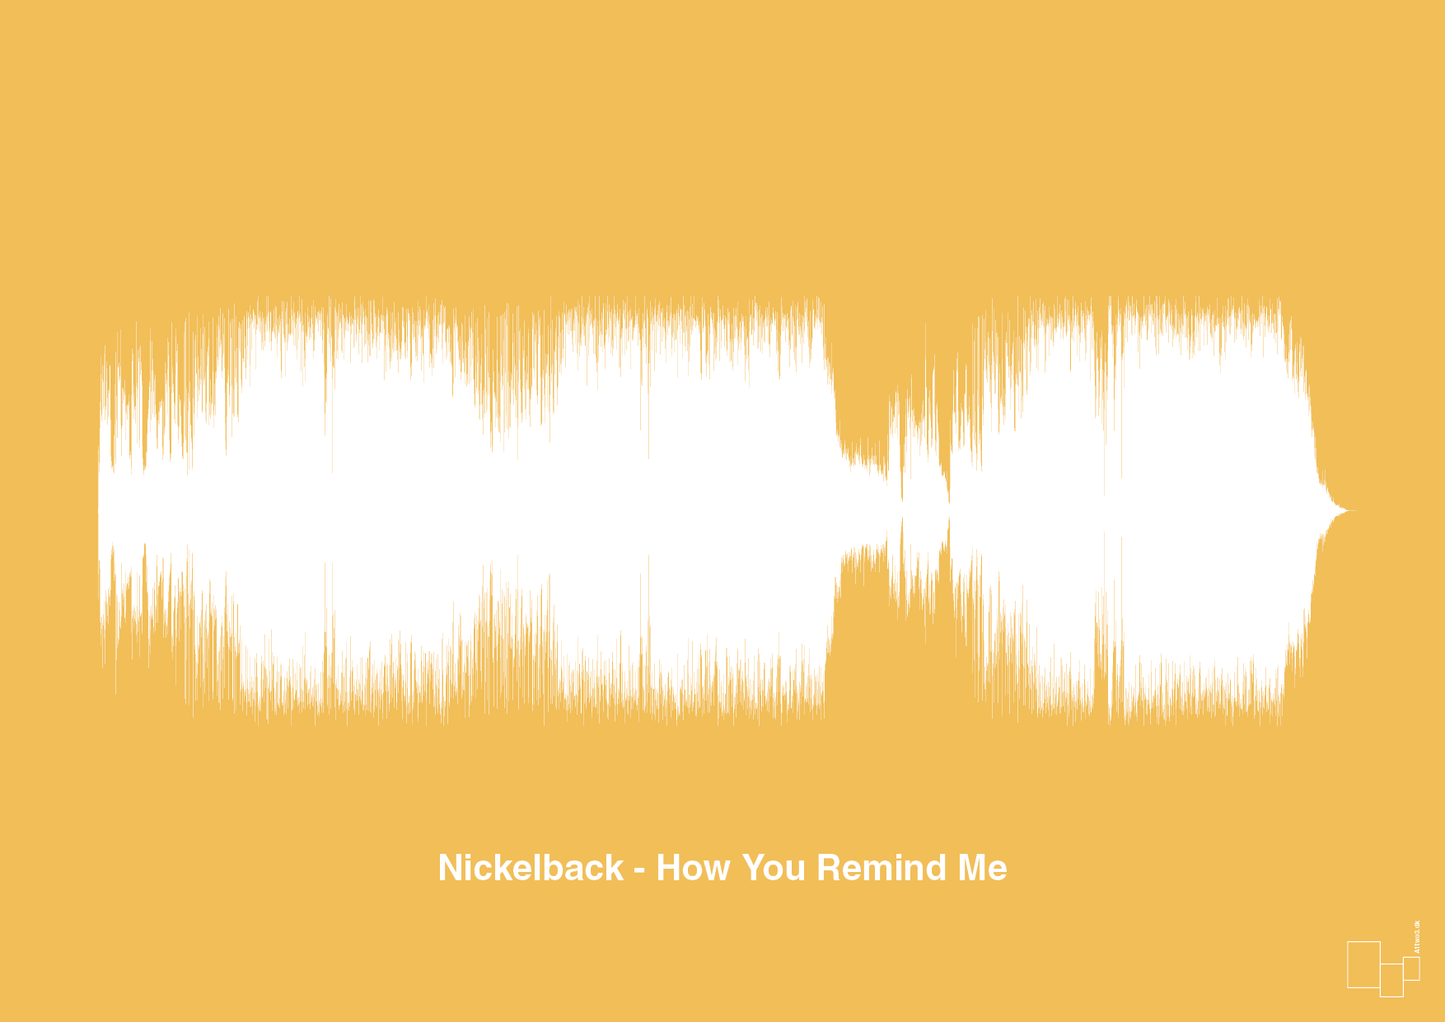 nickelback - how you remind me - Plakat med Musik i Honeycomb